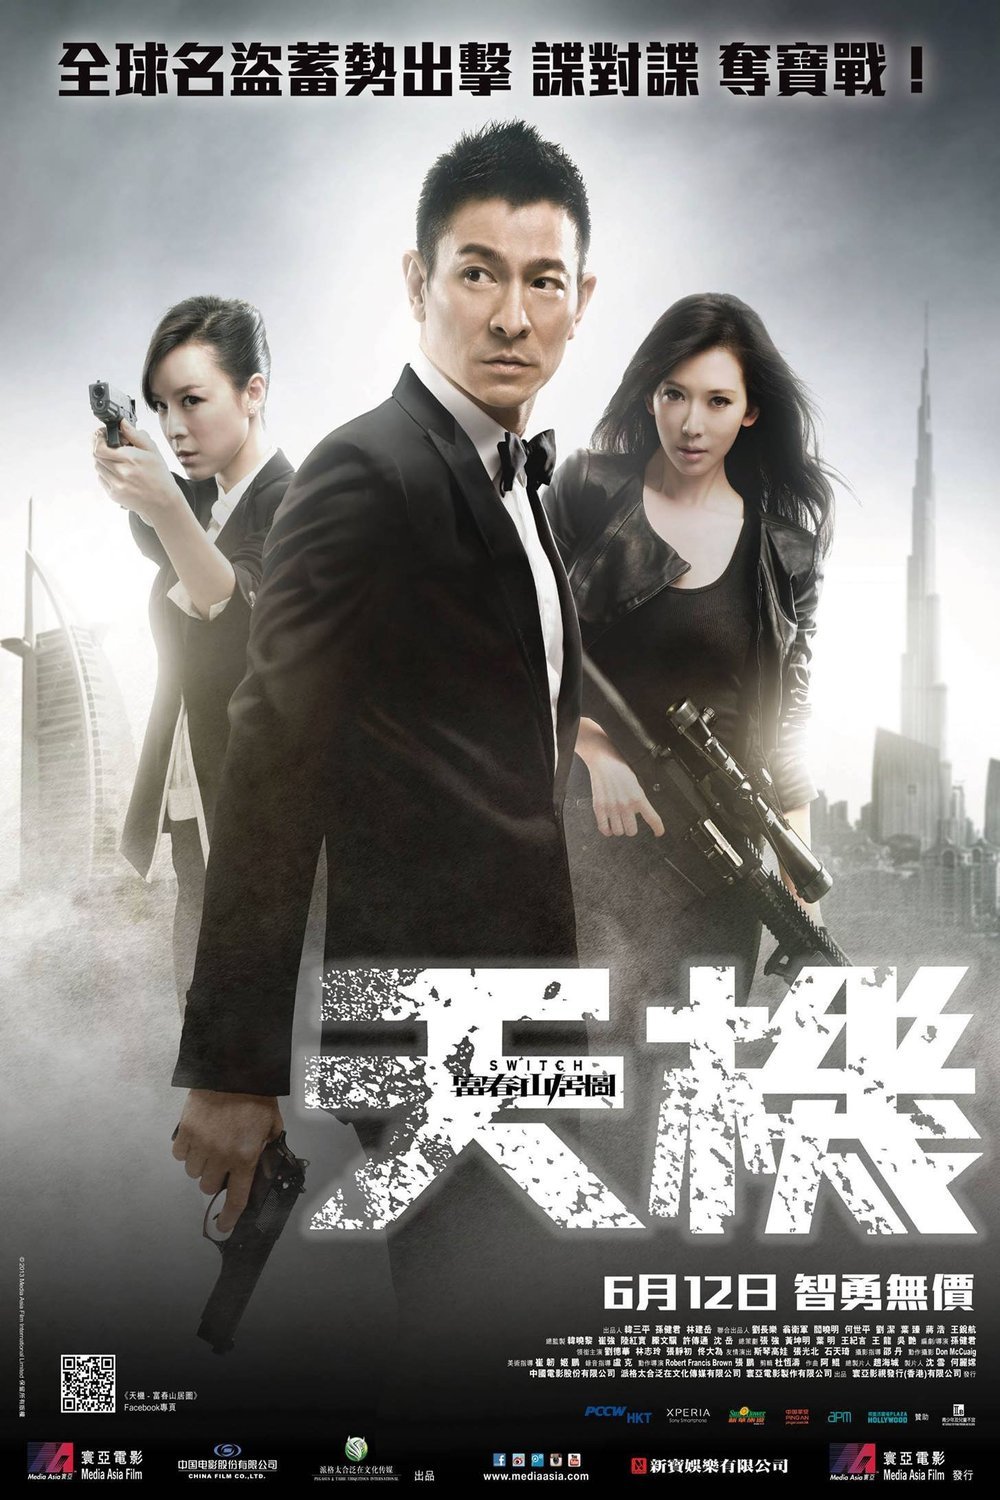 L'affiche originale du film Switch en mandarin